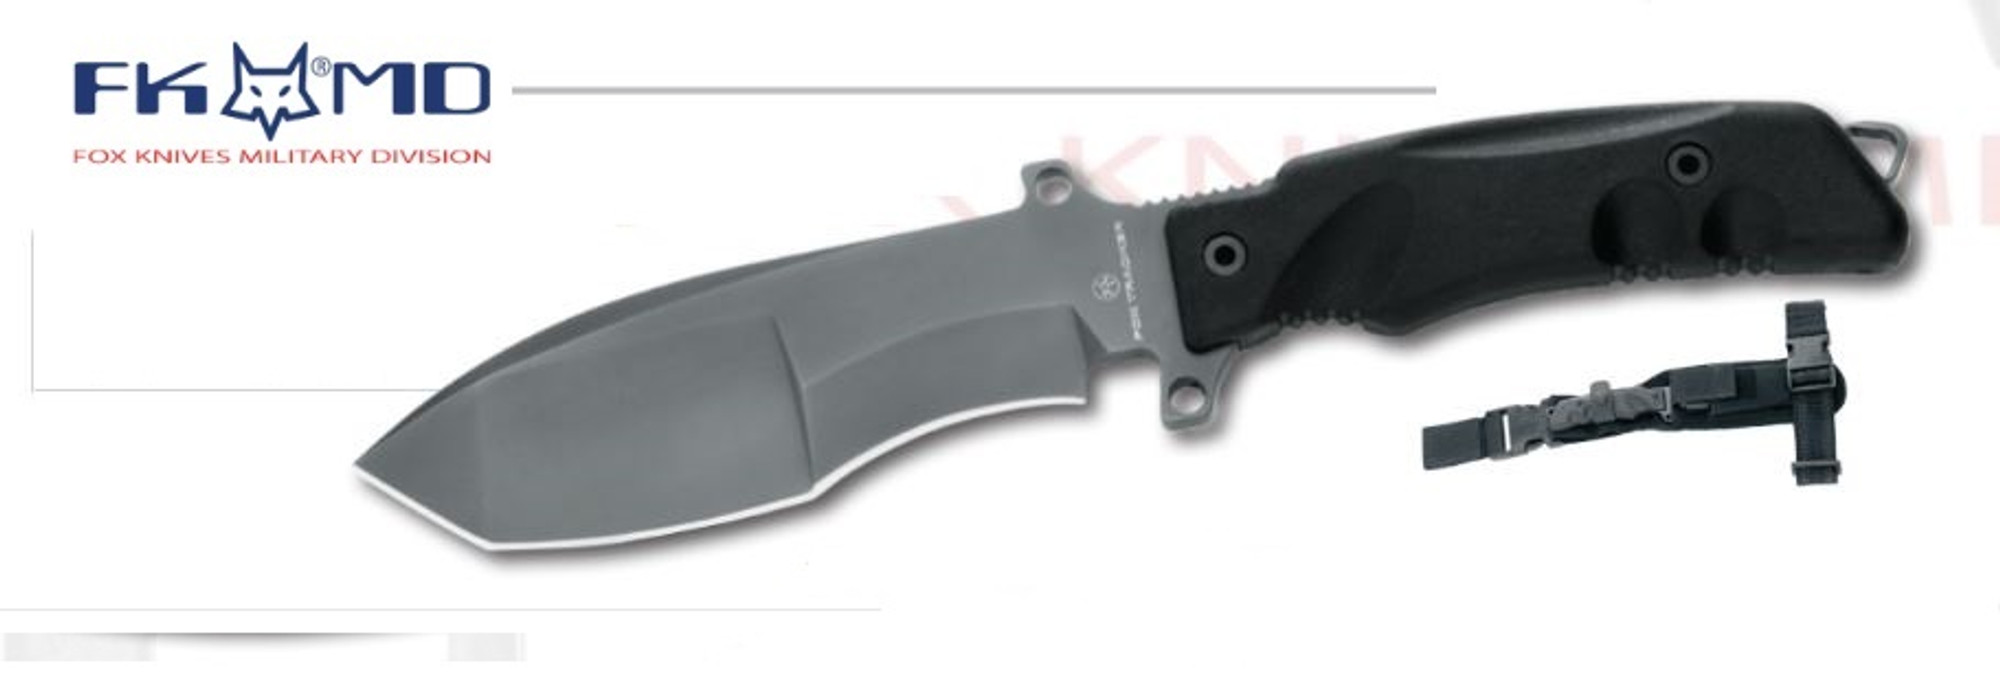 Fox Italy FX9CM01B FKMD Tracker Sniper Knife, N690